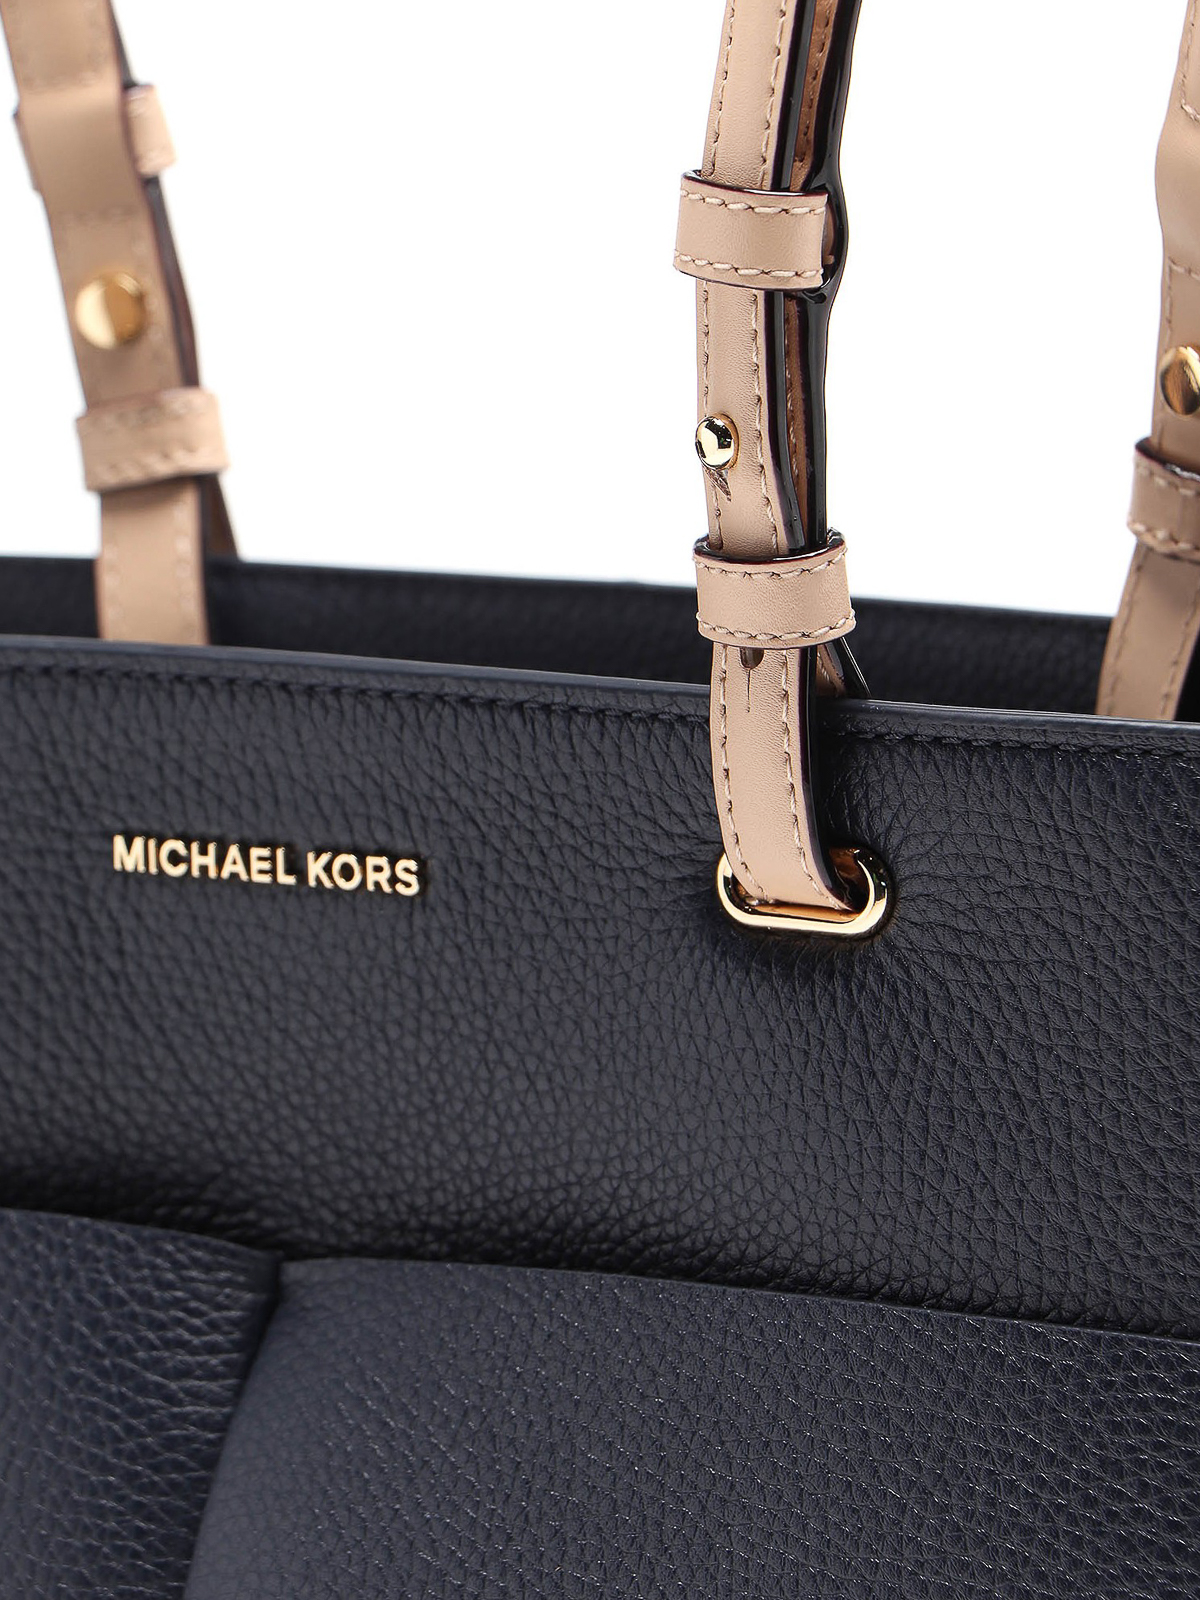  Michael Kors Bedford Medium Pebbled Leather Tote Bag